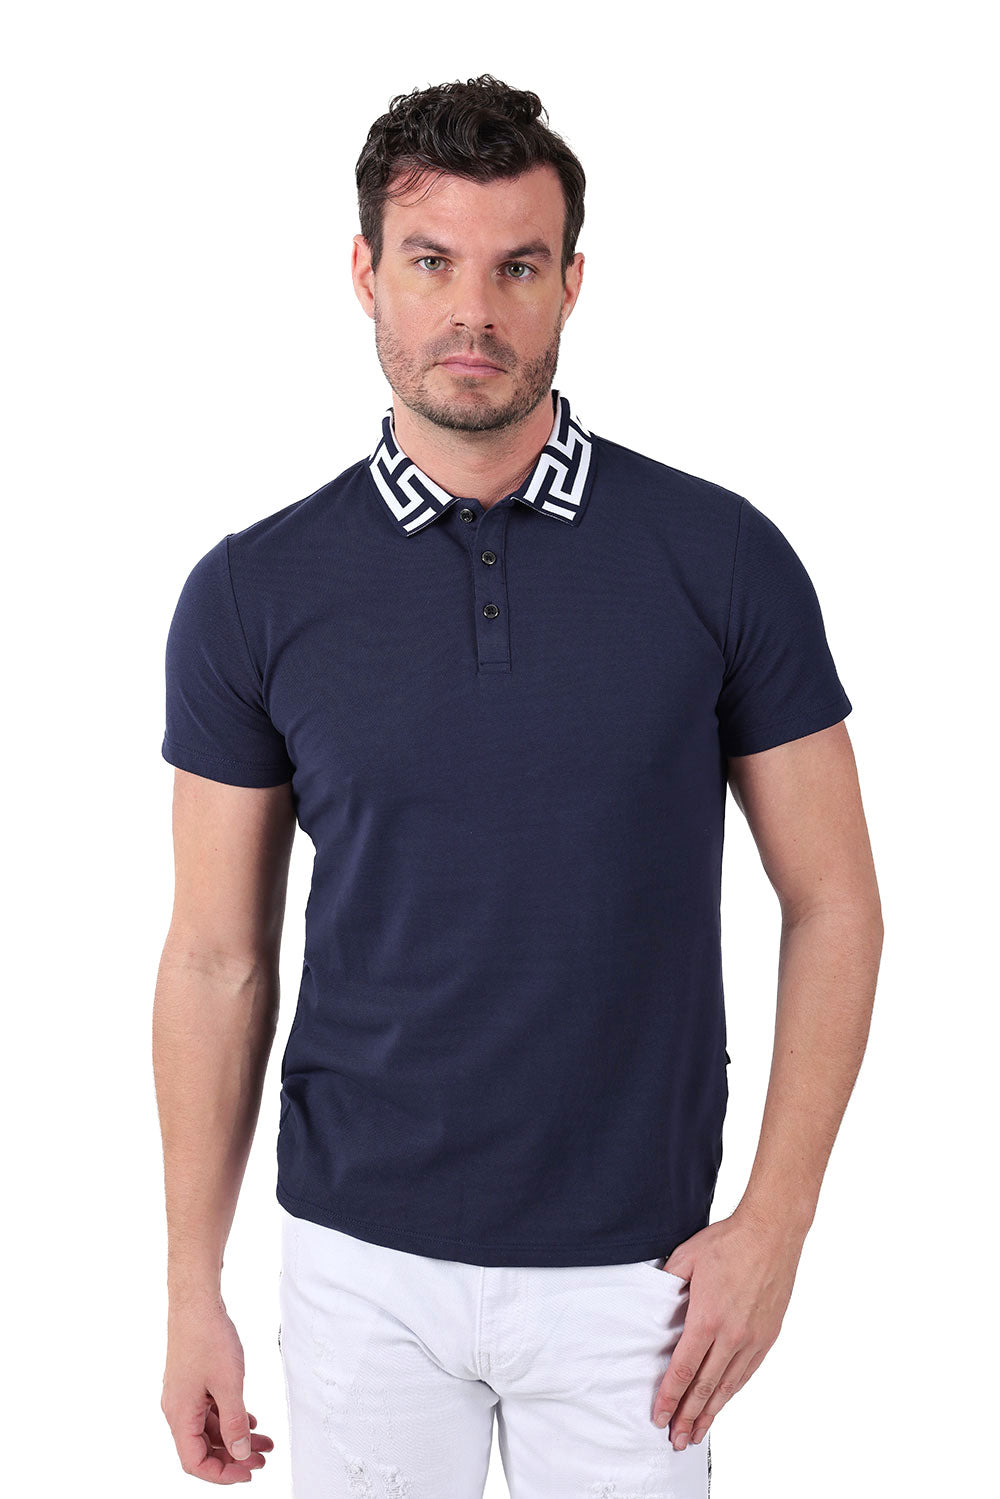 barabas  greek pattern navy blue polo shirt - alwaysspecialgifts.com